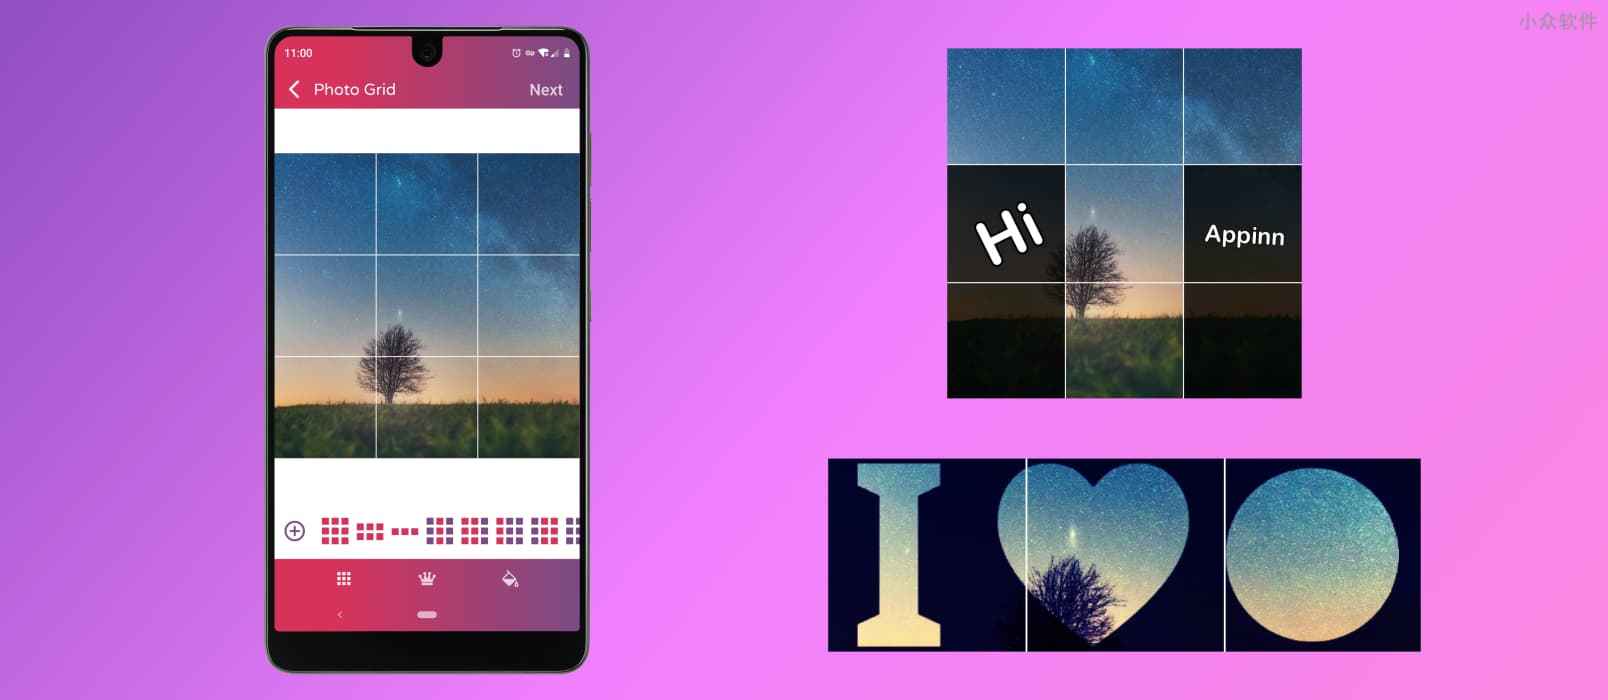 Photo Grids – 为 Instagram/朋友圈 无缝剪裁 9 宫格全景照片[Android]